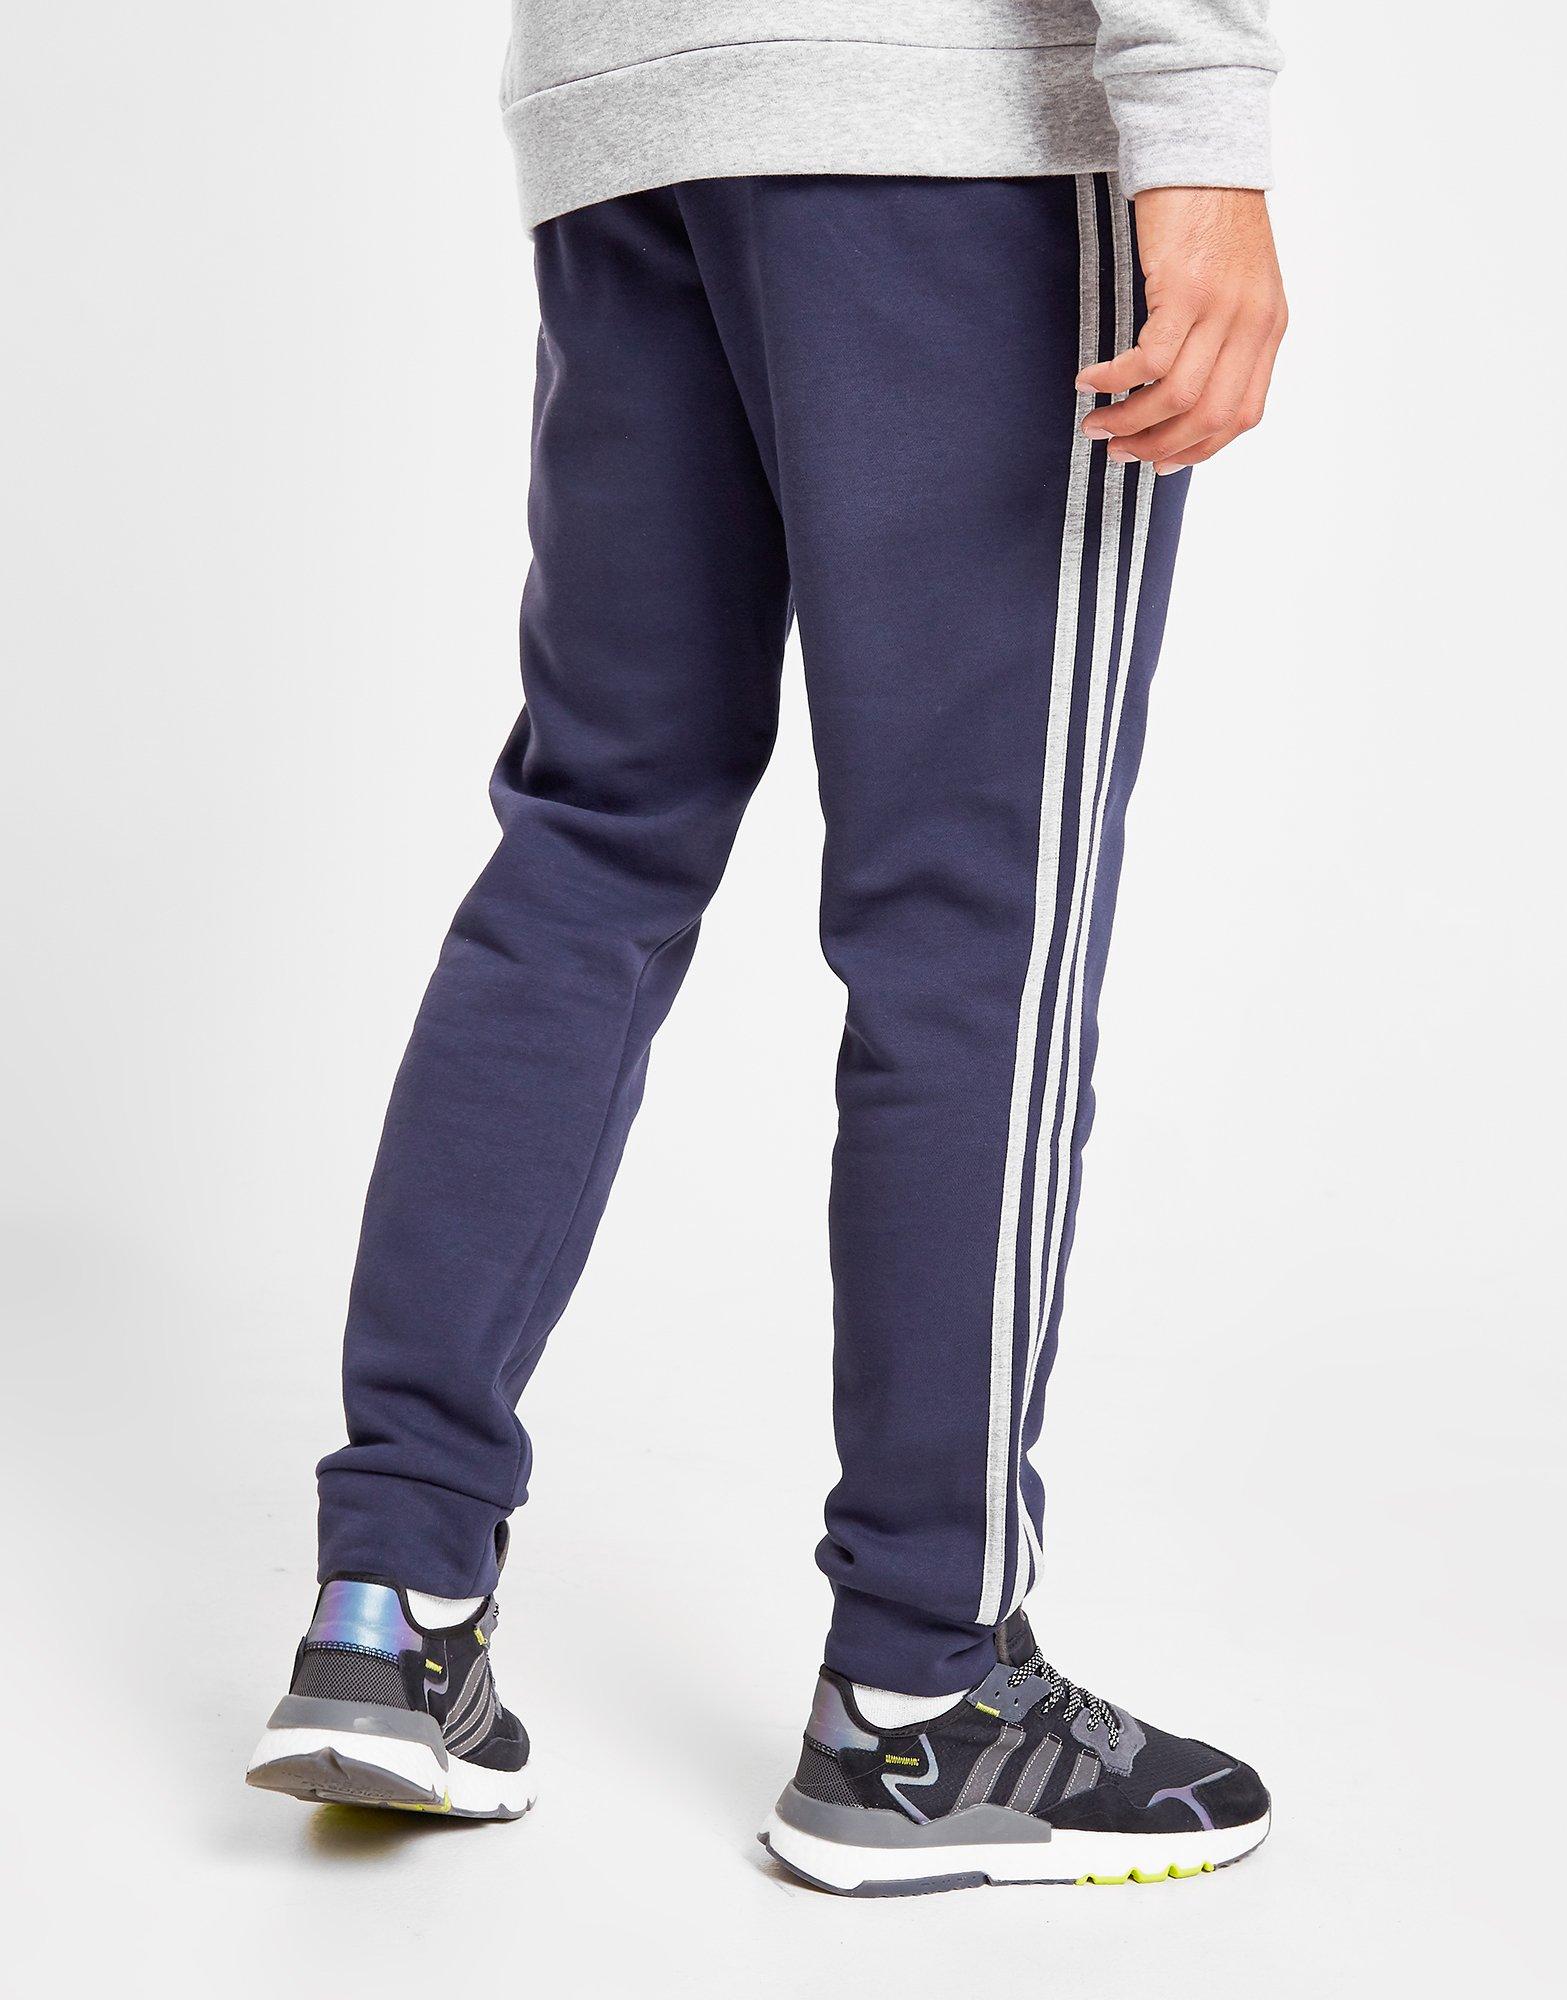 adidas pants blue stripes